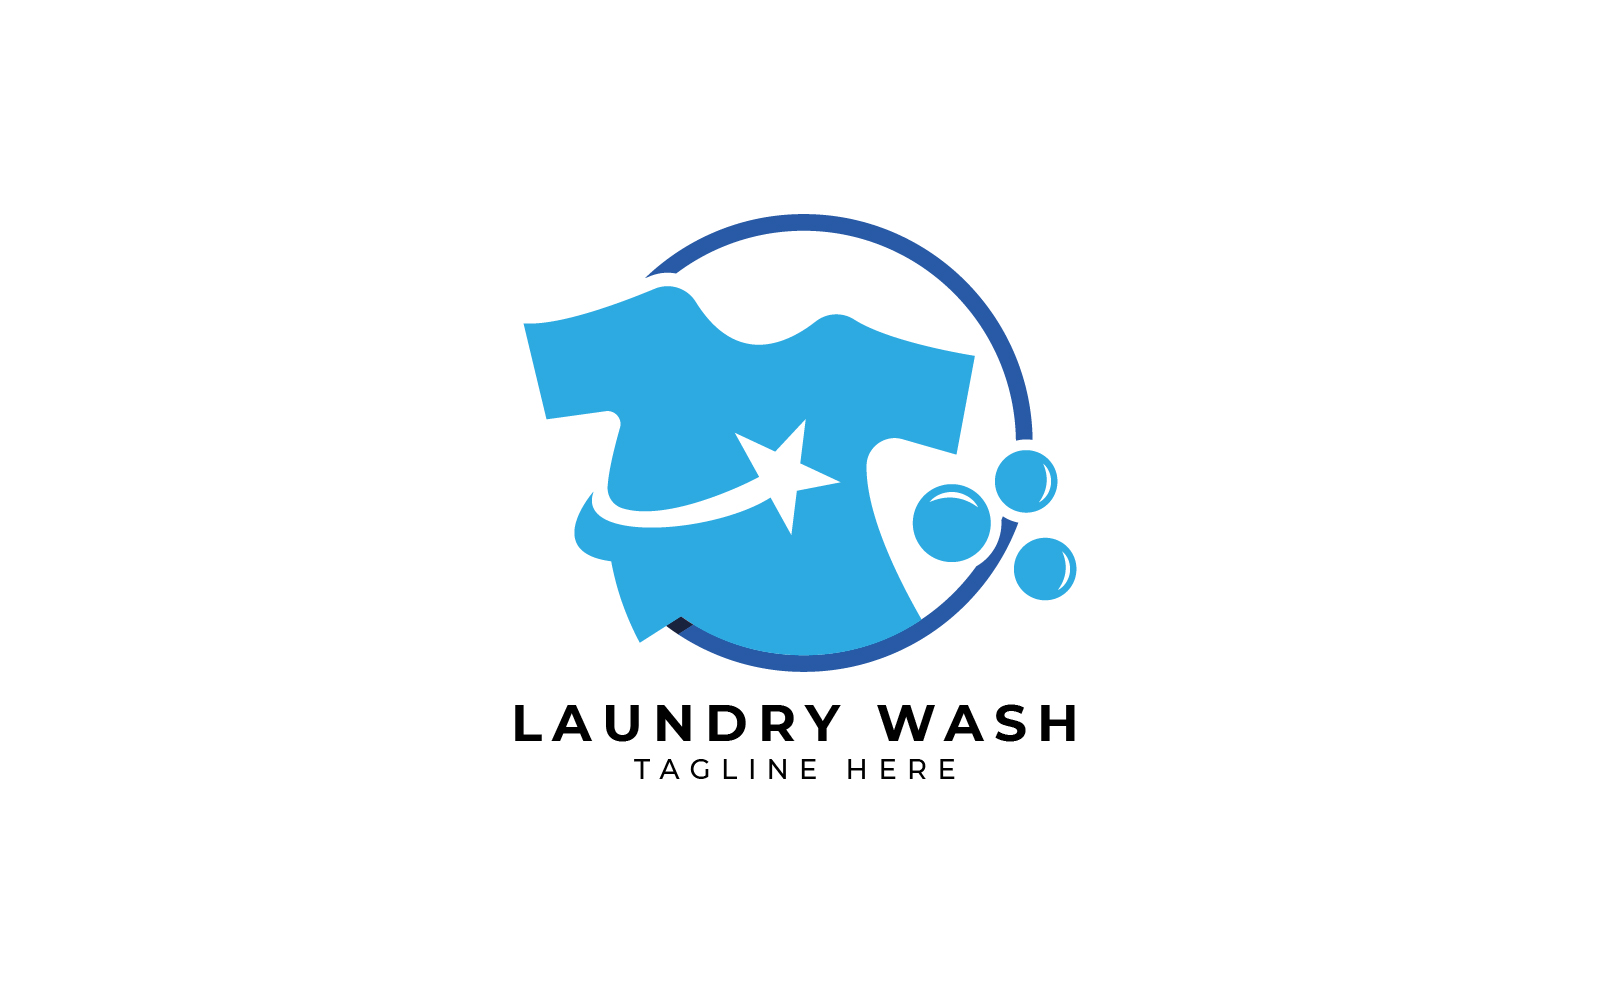 Laundry t shirt wash logo design template